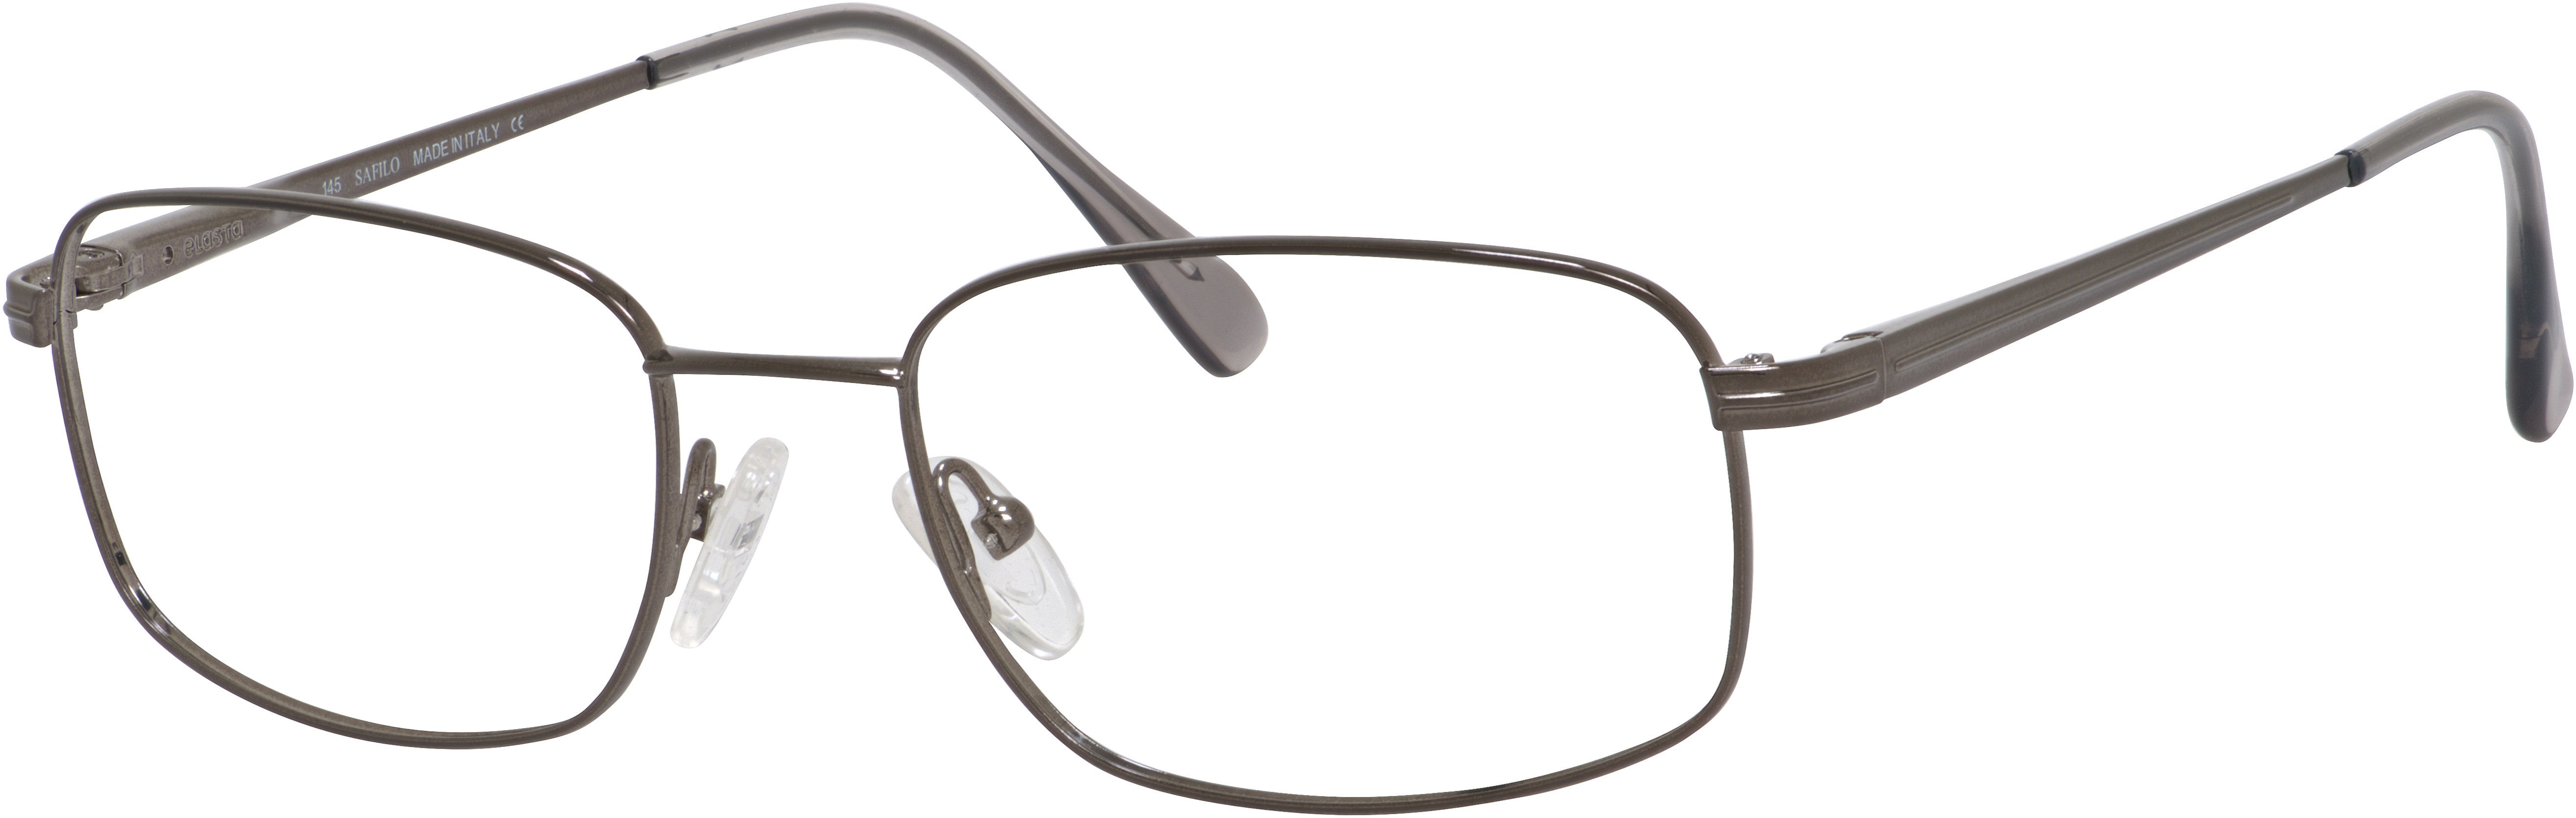  Elasta 7104 Rectangular Eyeglasses 02HH-02HH  Bakelite (00 Demo Lens)